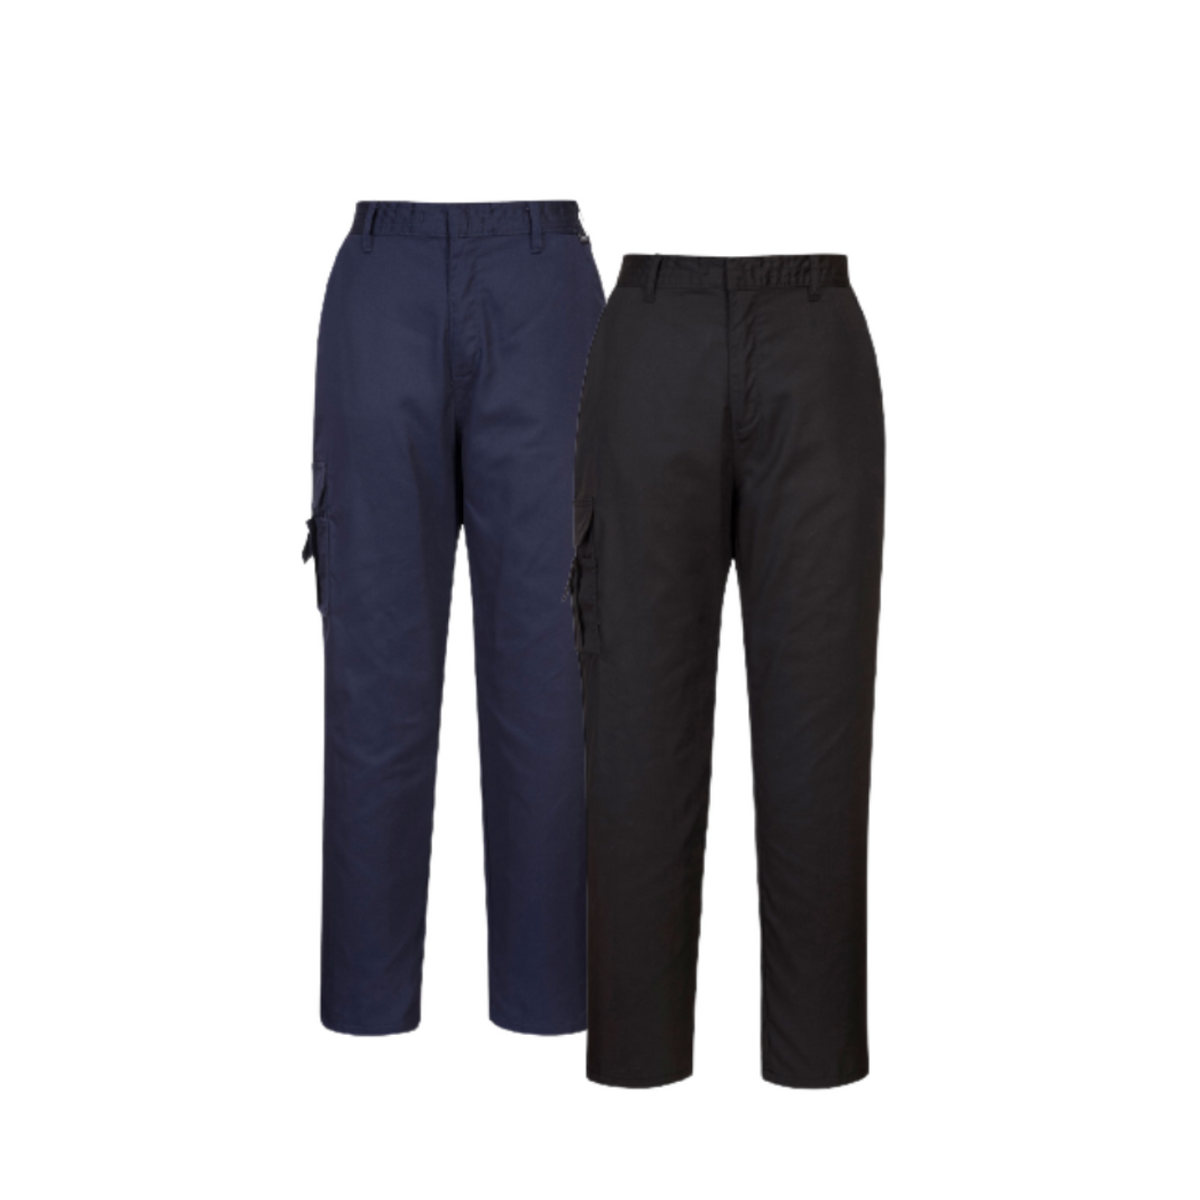 Portwest Ladies Combat Pants Comfortable 5 Pockets Straight Pant C099-Collins Clothing Co